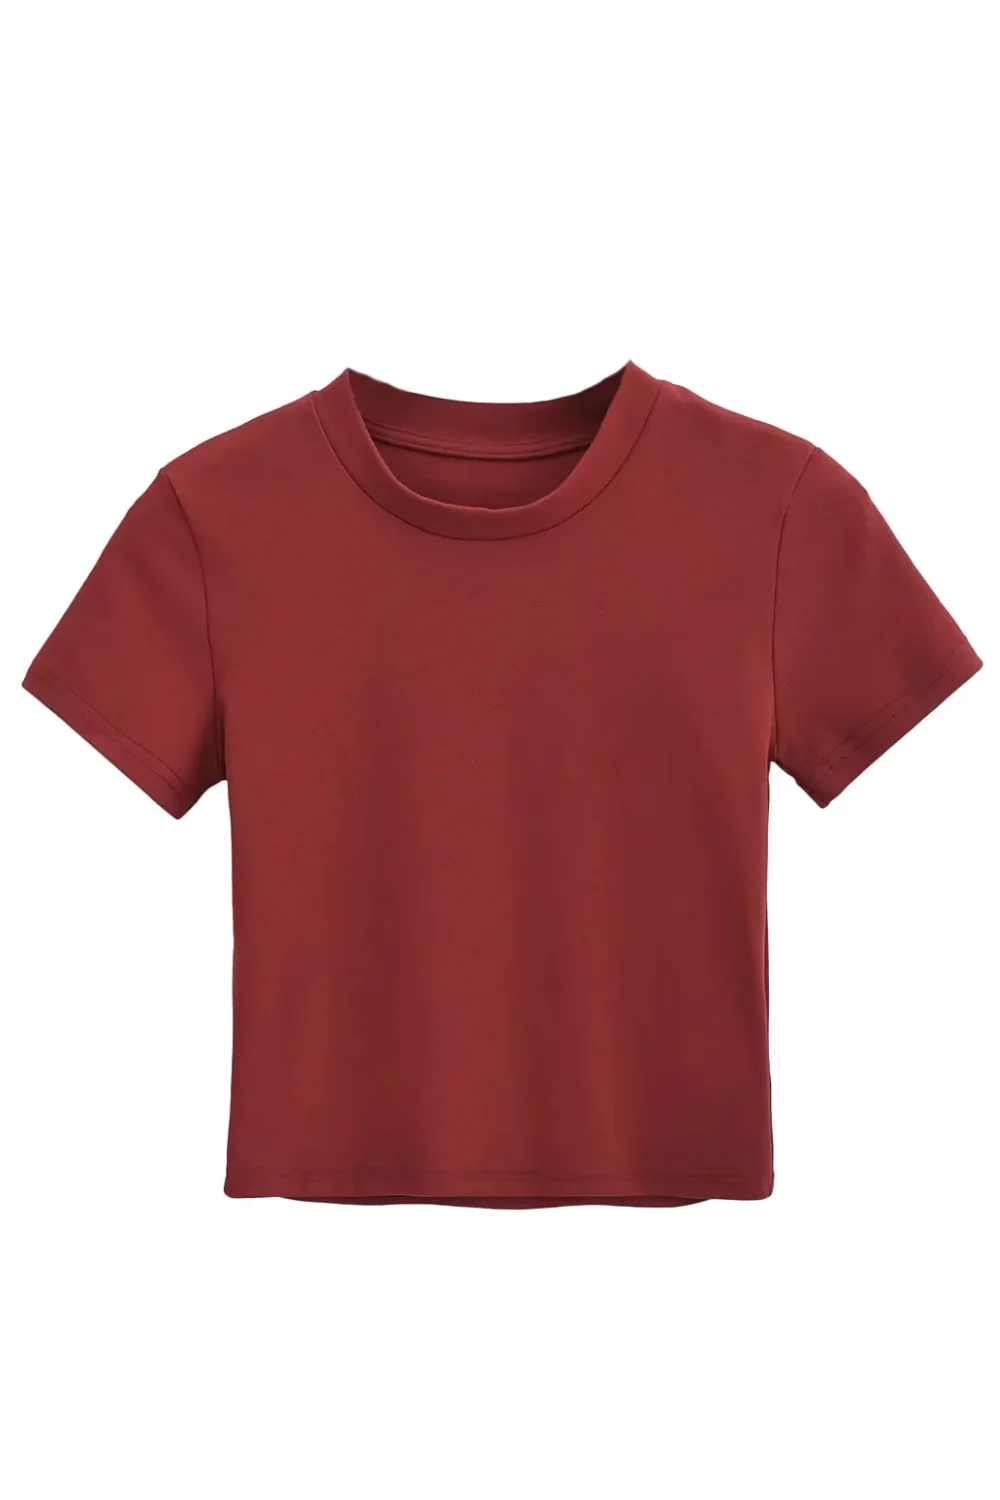 'Zabrina' Crew Neck Short-Sleeved T-Shirt (4 Colors)